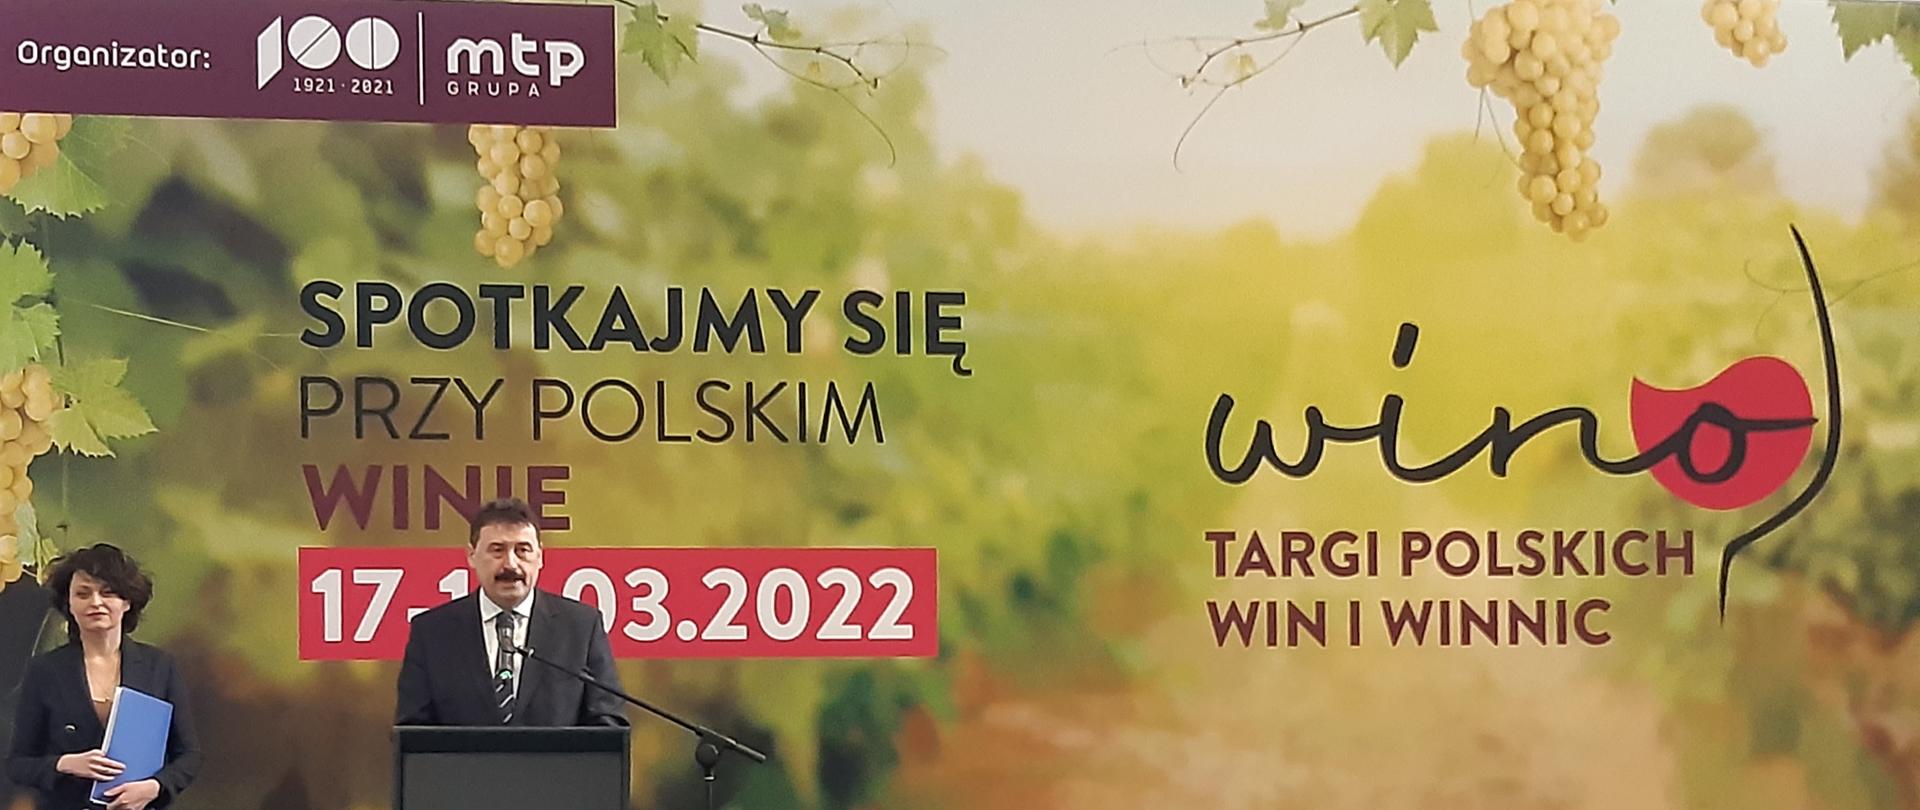 Targi Polskich Win i Winnic – WINO